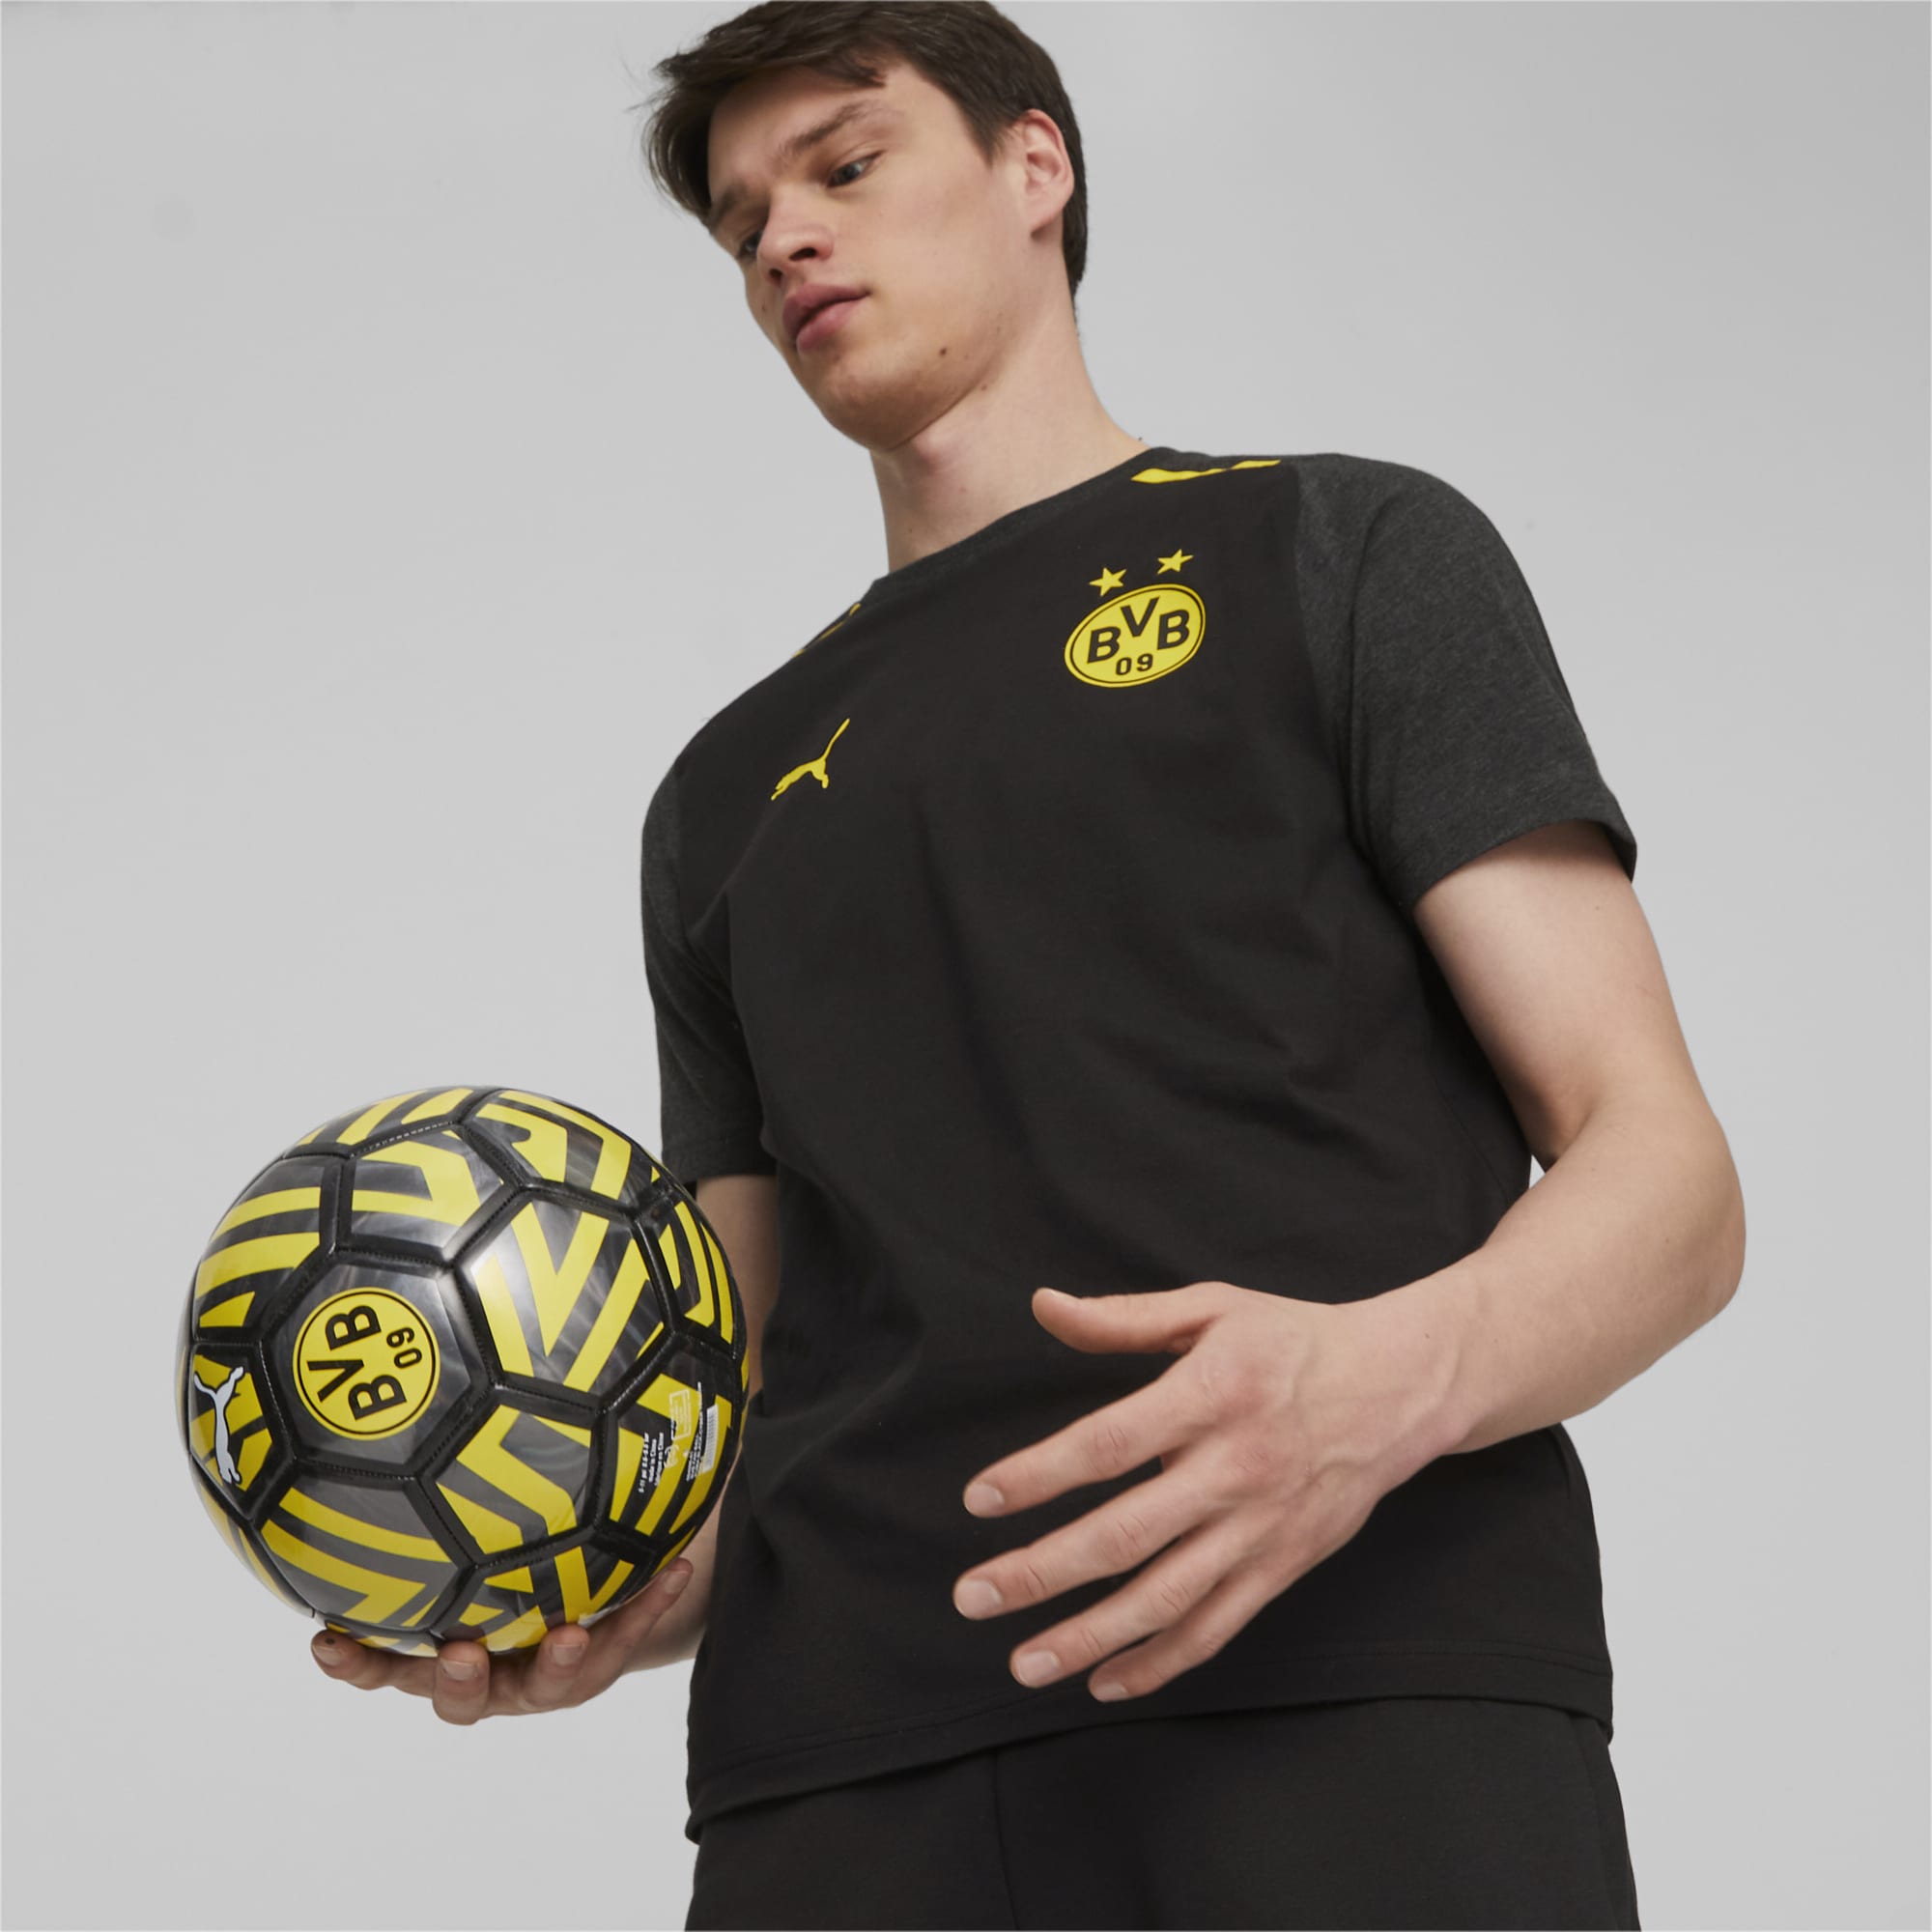 Men's PUMA Borussia Dortmund Football Casuals T-Shirt, Black/Cyber Yellow, Size XL, Clothing